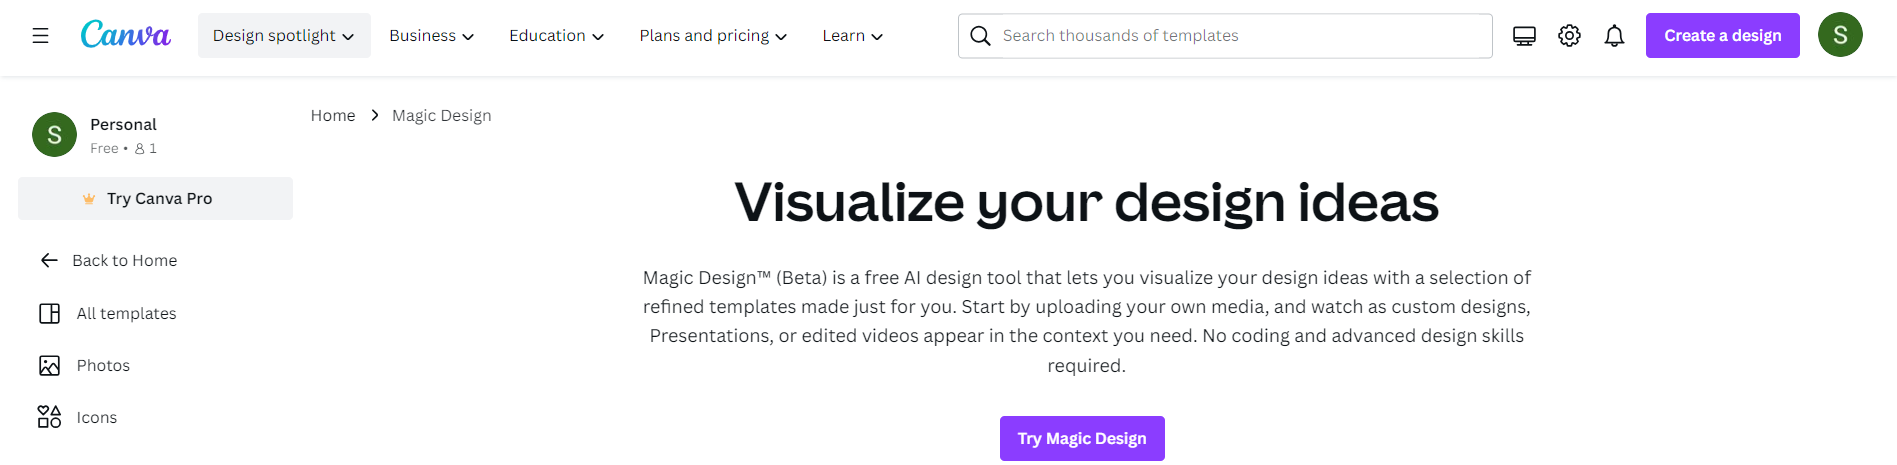 Canva's Magic Design page describes Magic Design as a free AI design tool.